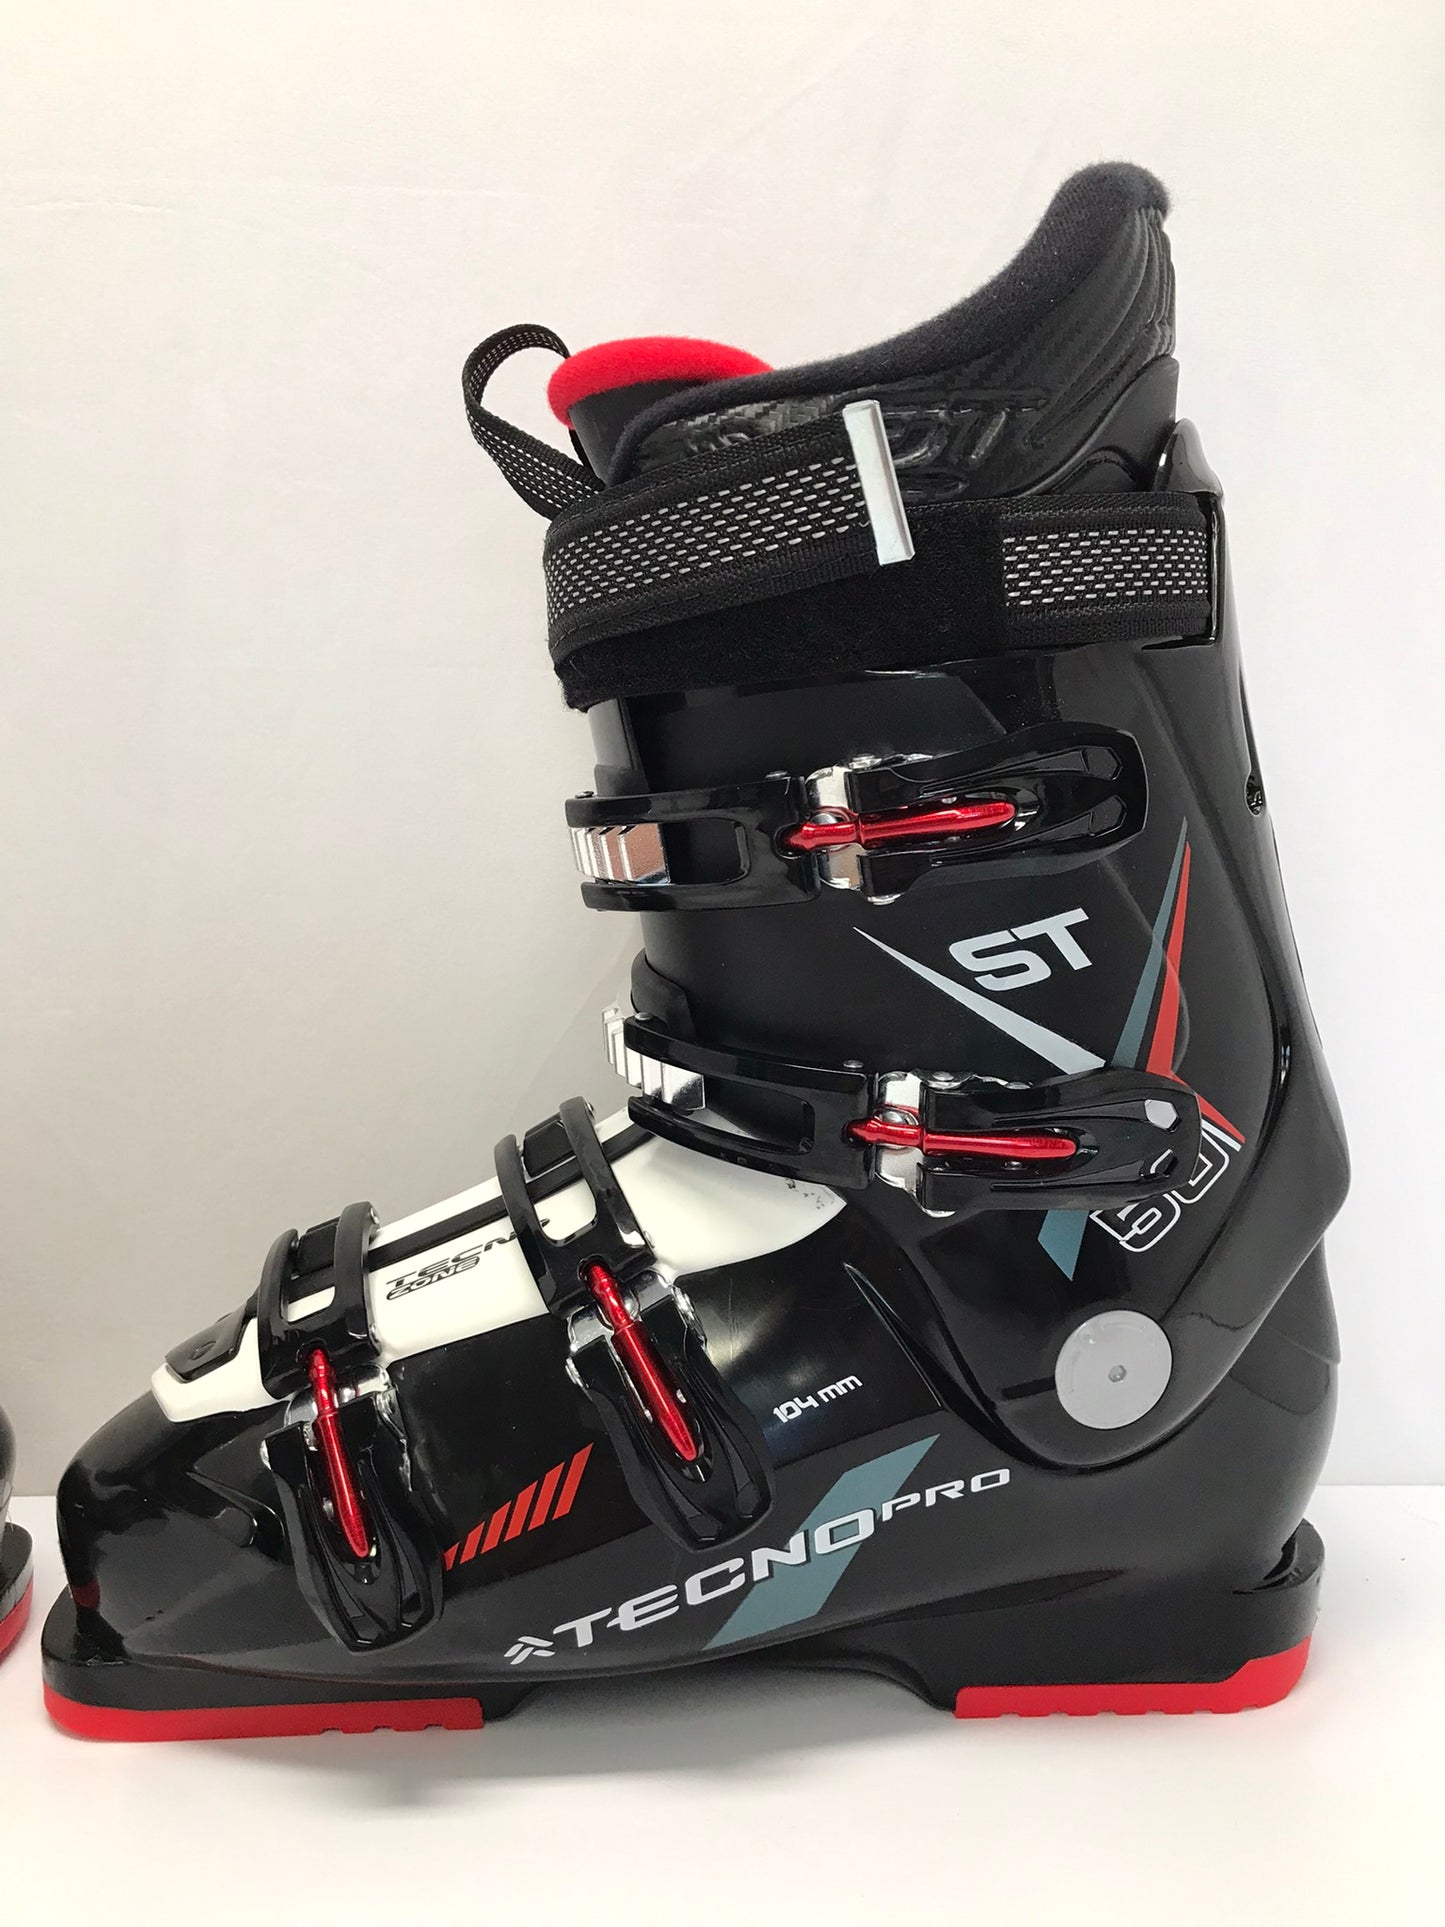 Ski Boots Mondo Size 28.5 Men's Size 10.5 326 mm Tecno Pro Black Red White New Demo Model